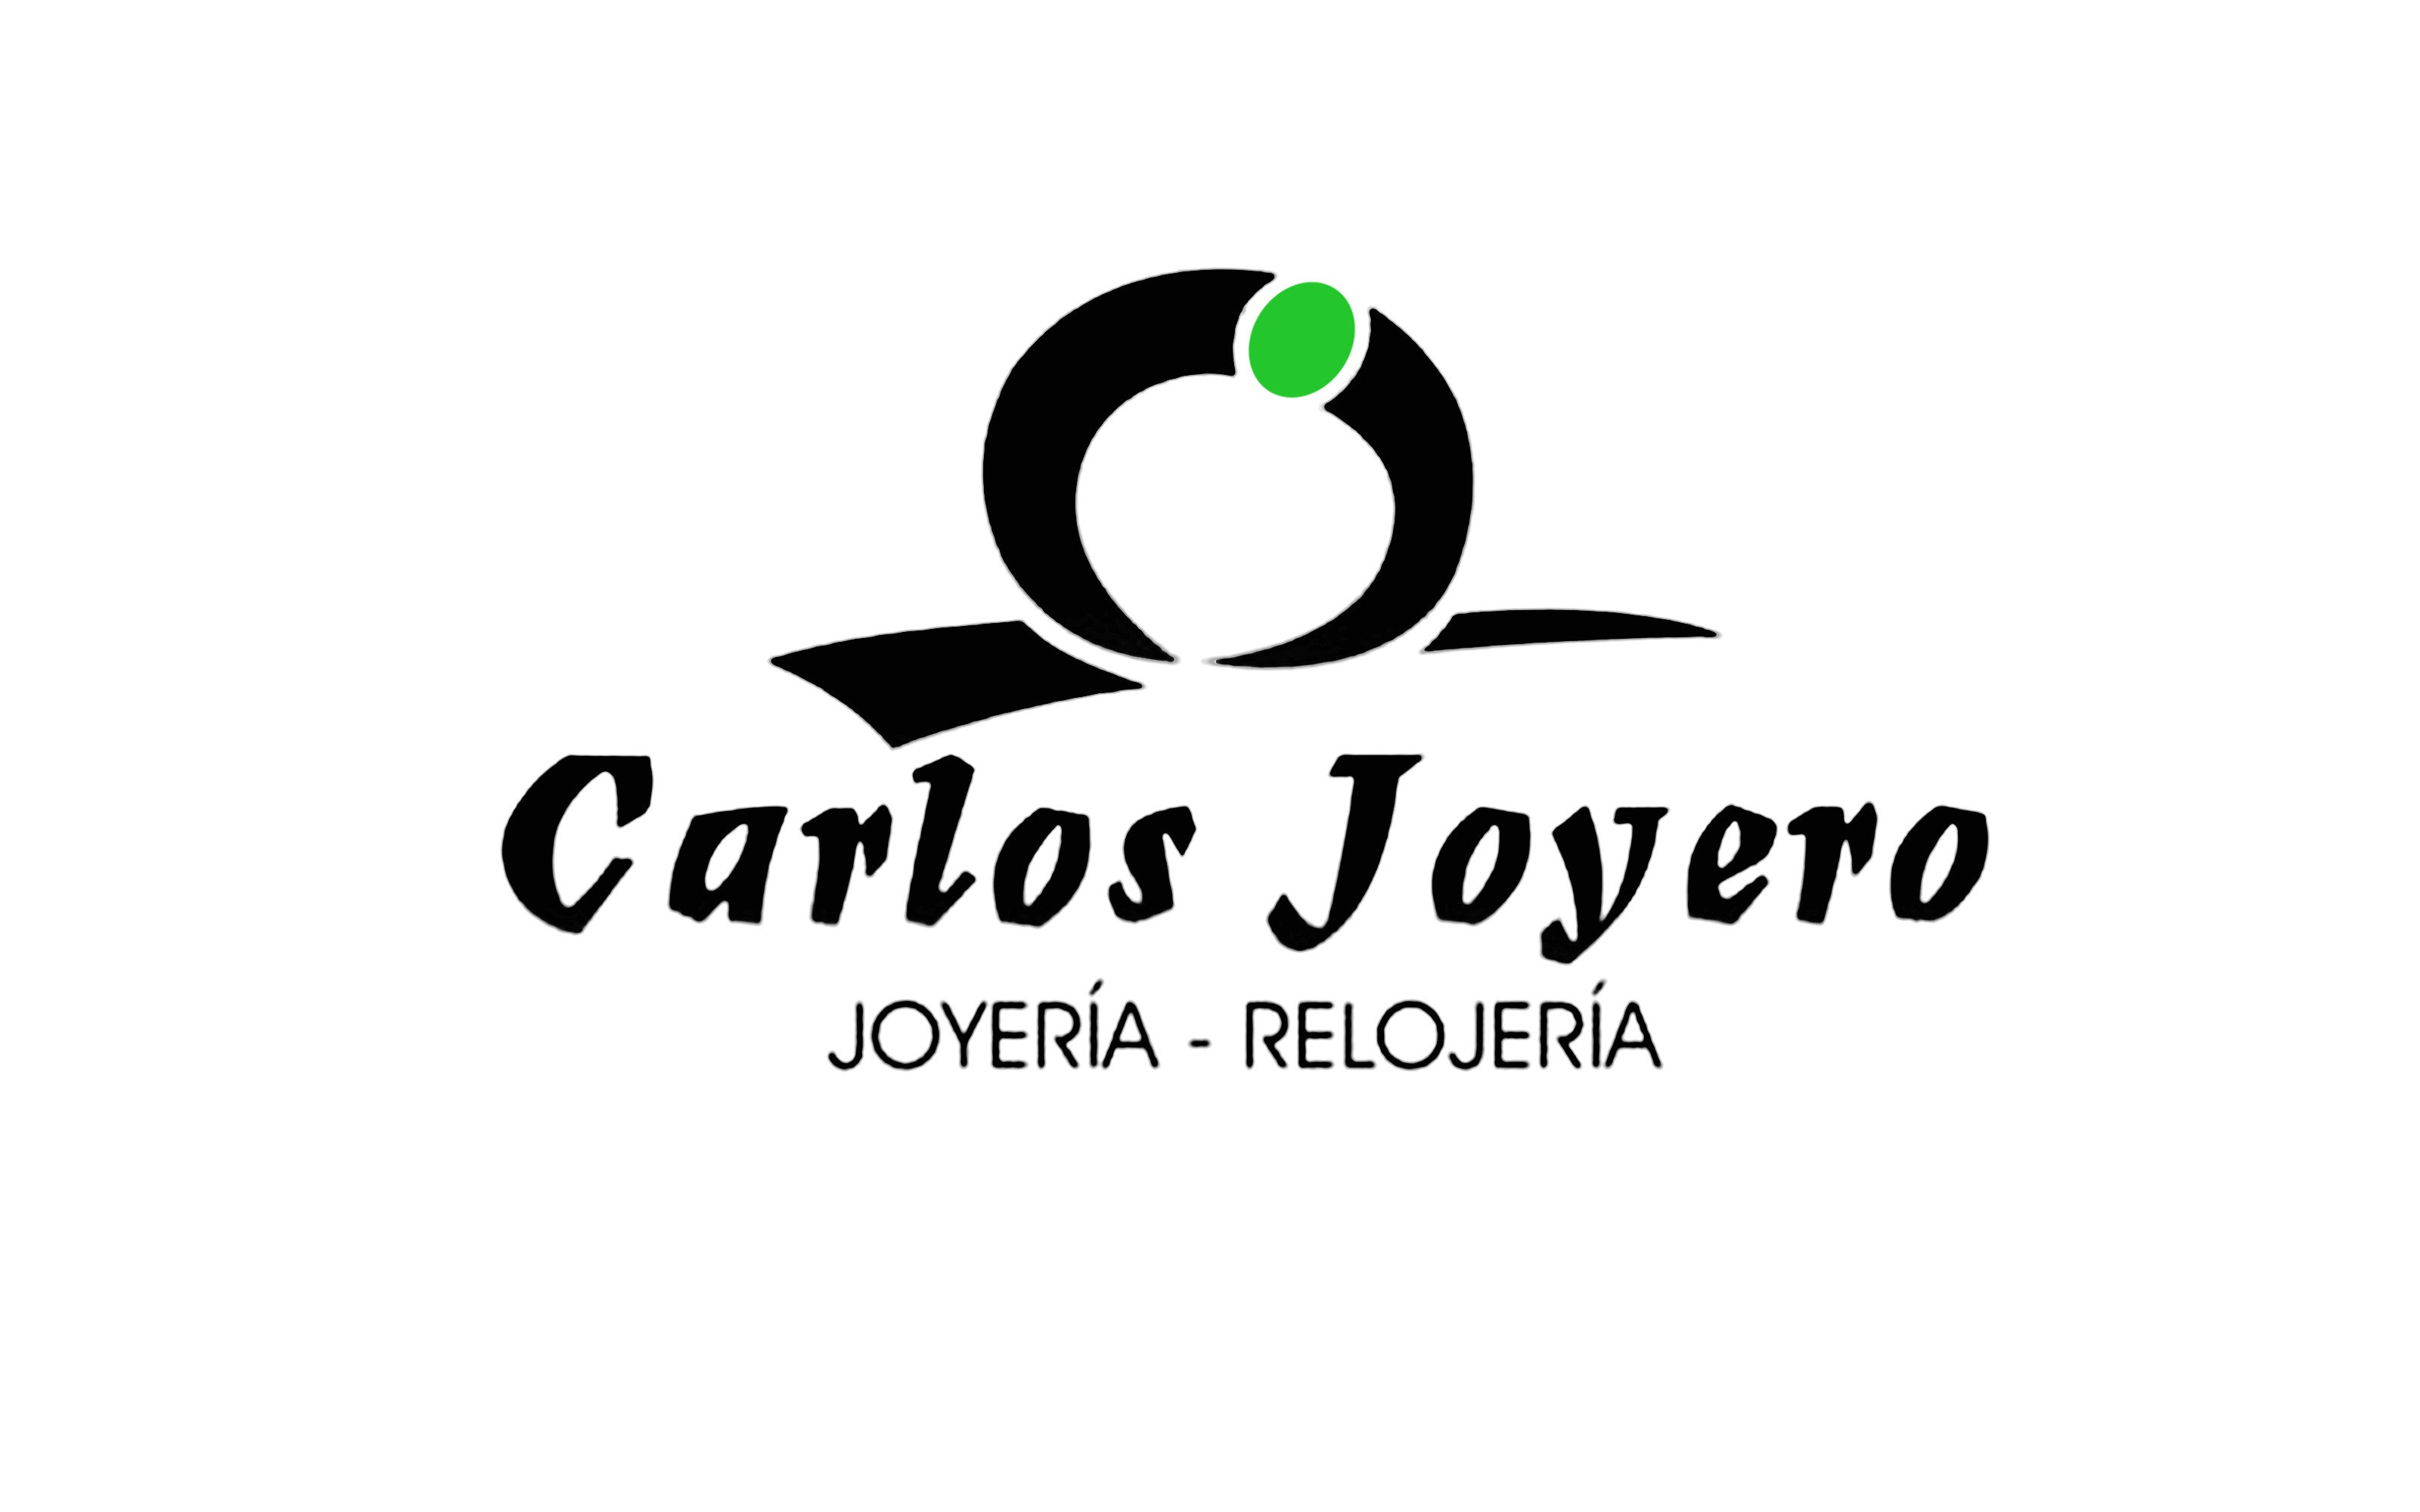 Carlos Joyero